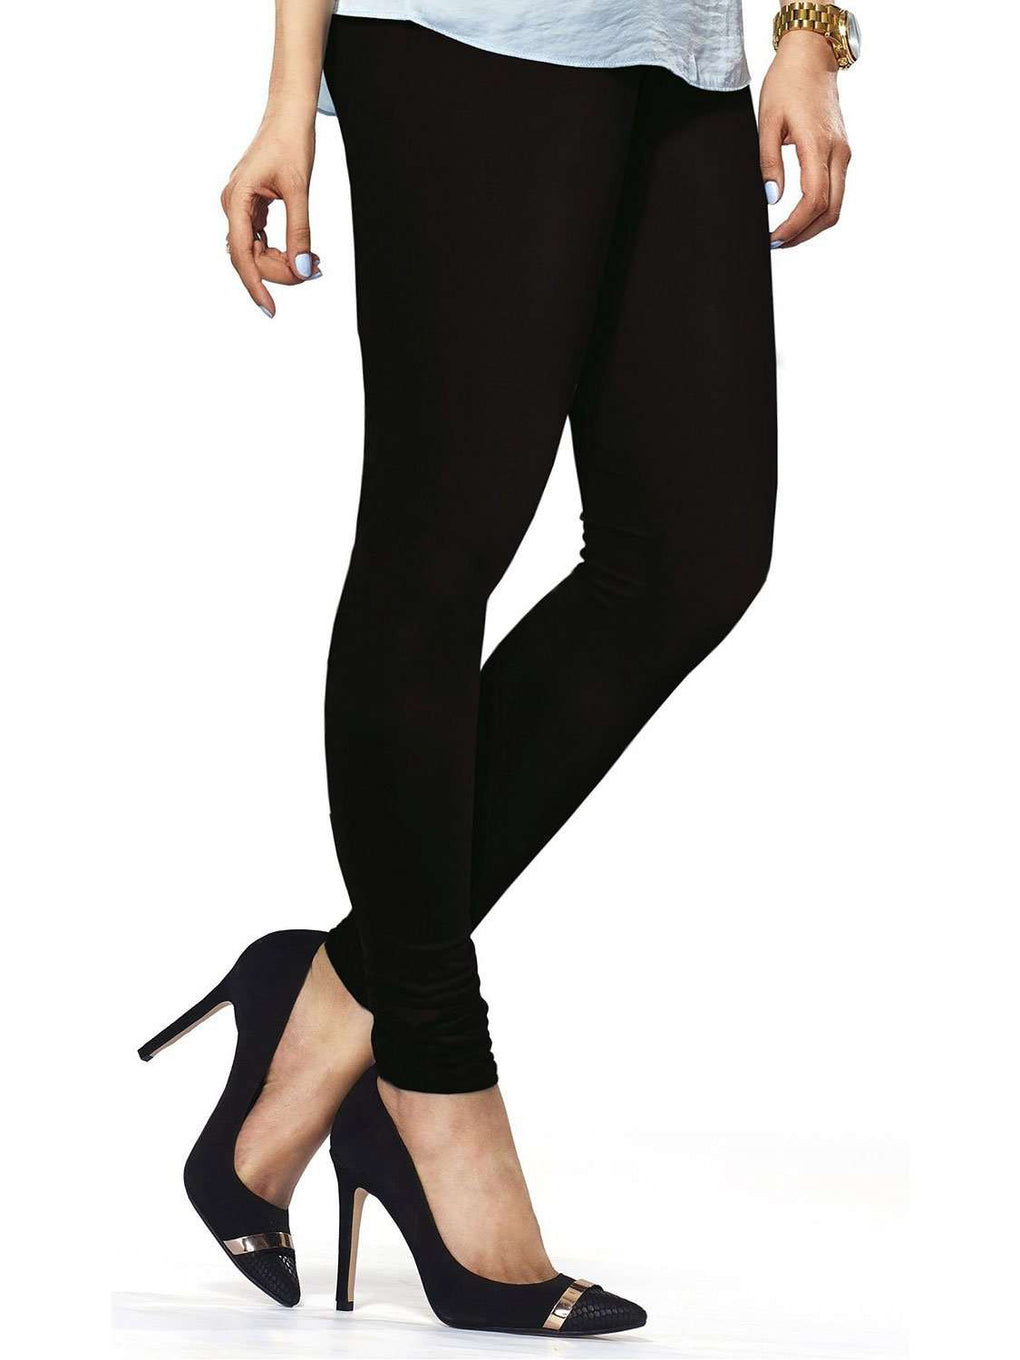 EXTRA LONG Leggings Pants Shiny WET LOOK Black Size 20 22 24 26 28 Plus  Curve XL | eBay